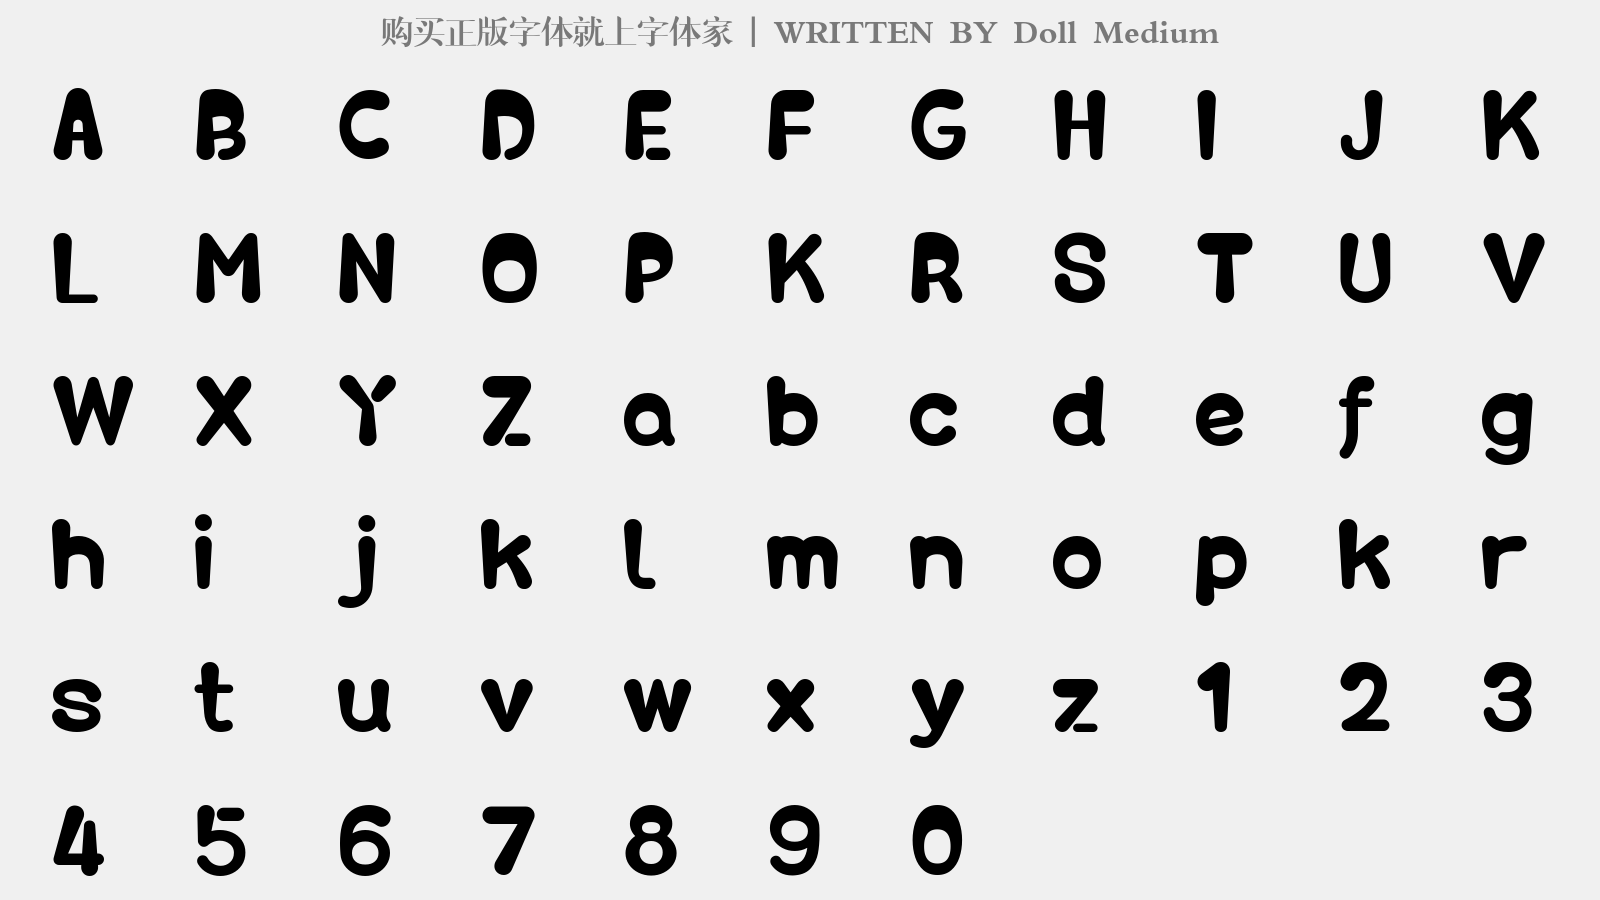 Doll Medium - 大写字母/小写字母/数字